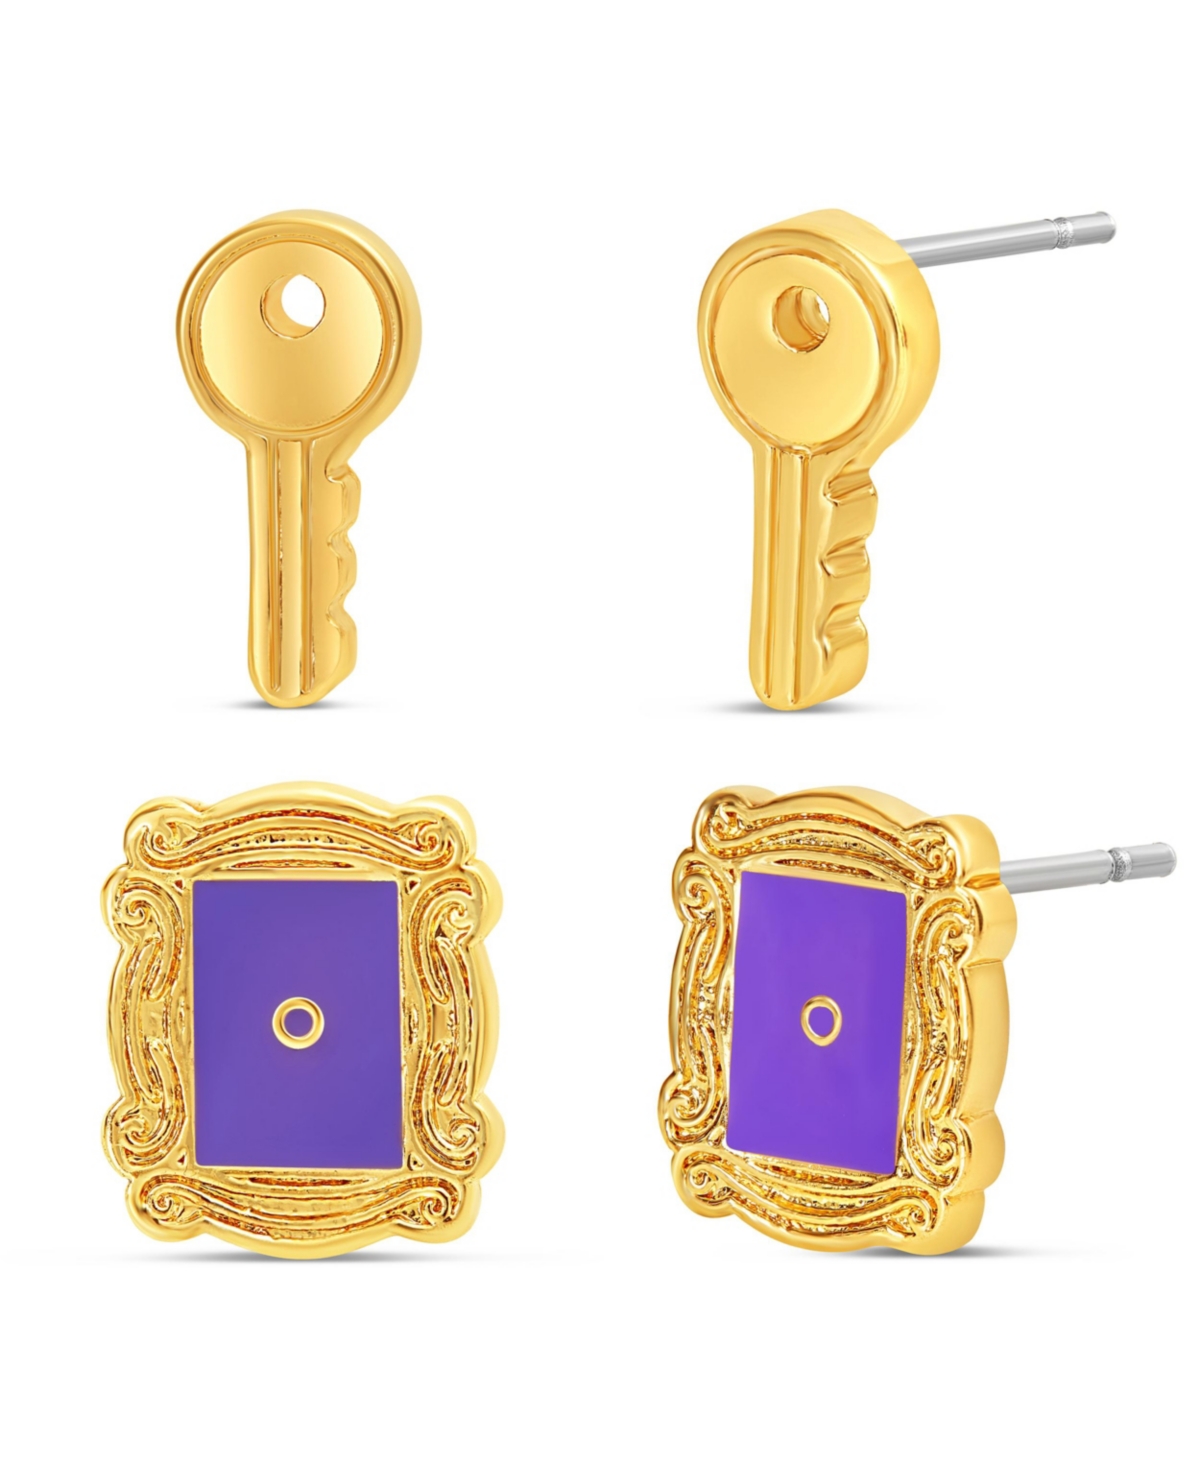 Tv Show Faison Stud Earring Set - Peephole Frame and Key - 2 Pairs - Gold tone, yellow, purple